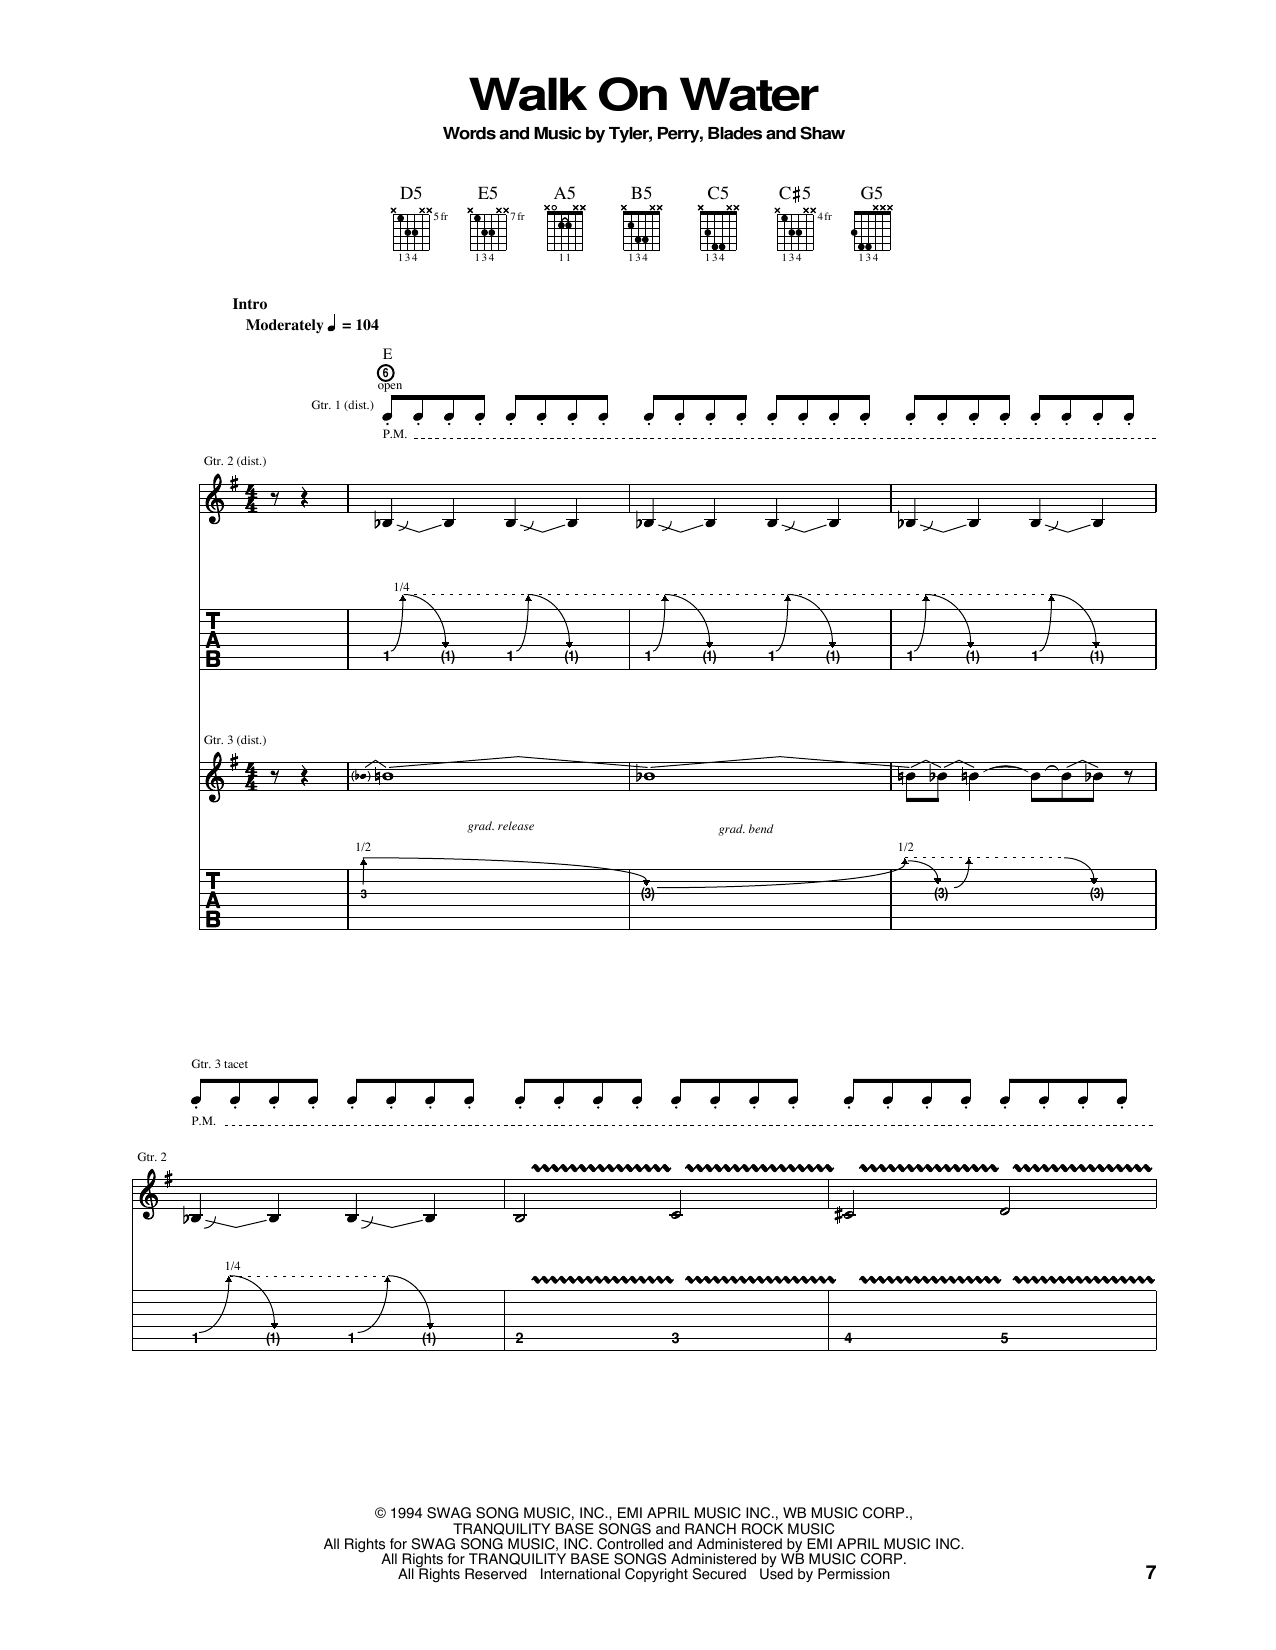 Aerosmith Walk On Water Sheet Music Notes & Chords for Guitar Tab - Download or Print PDF